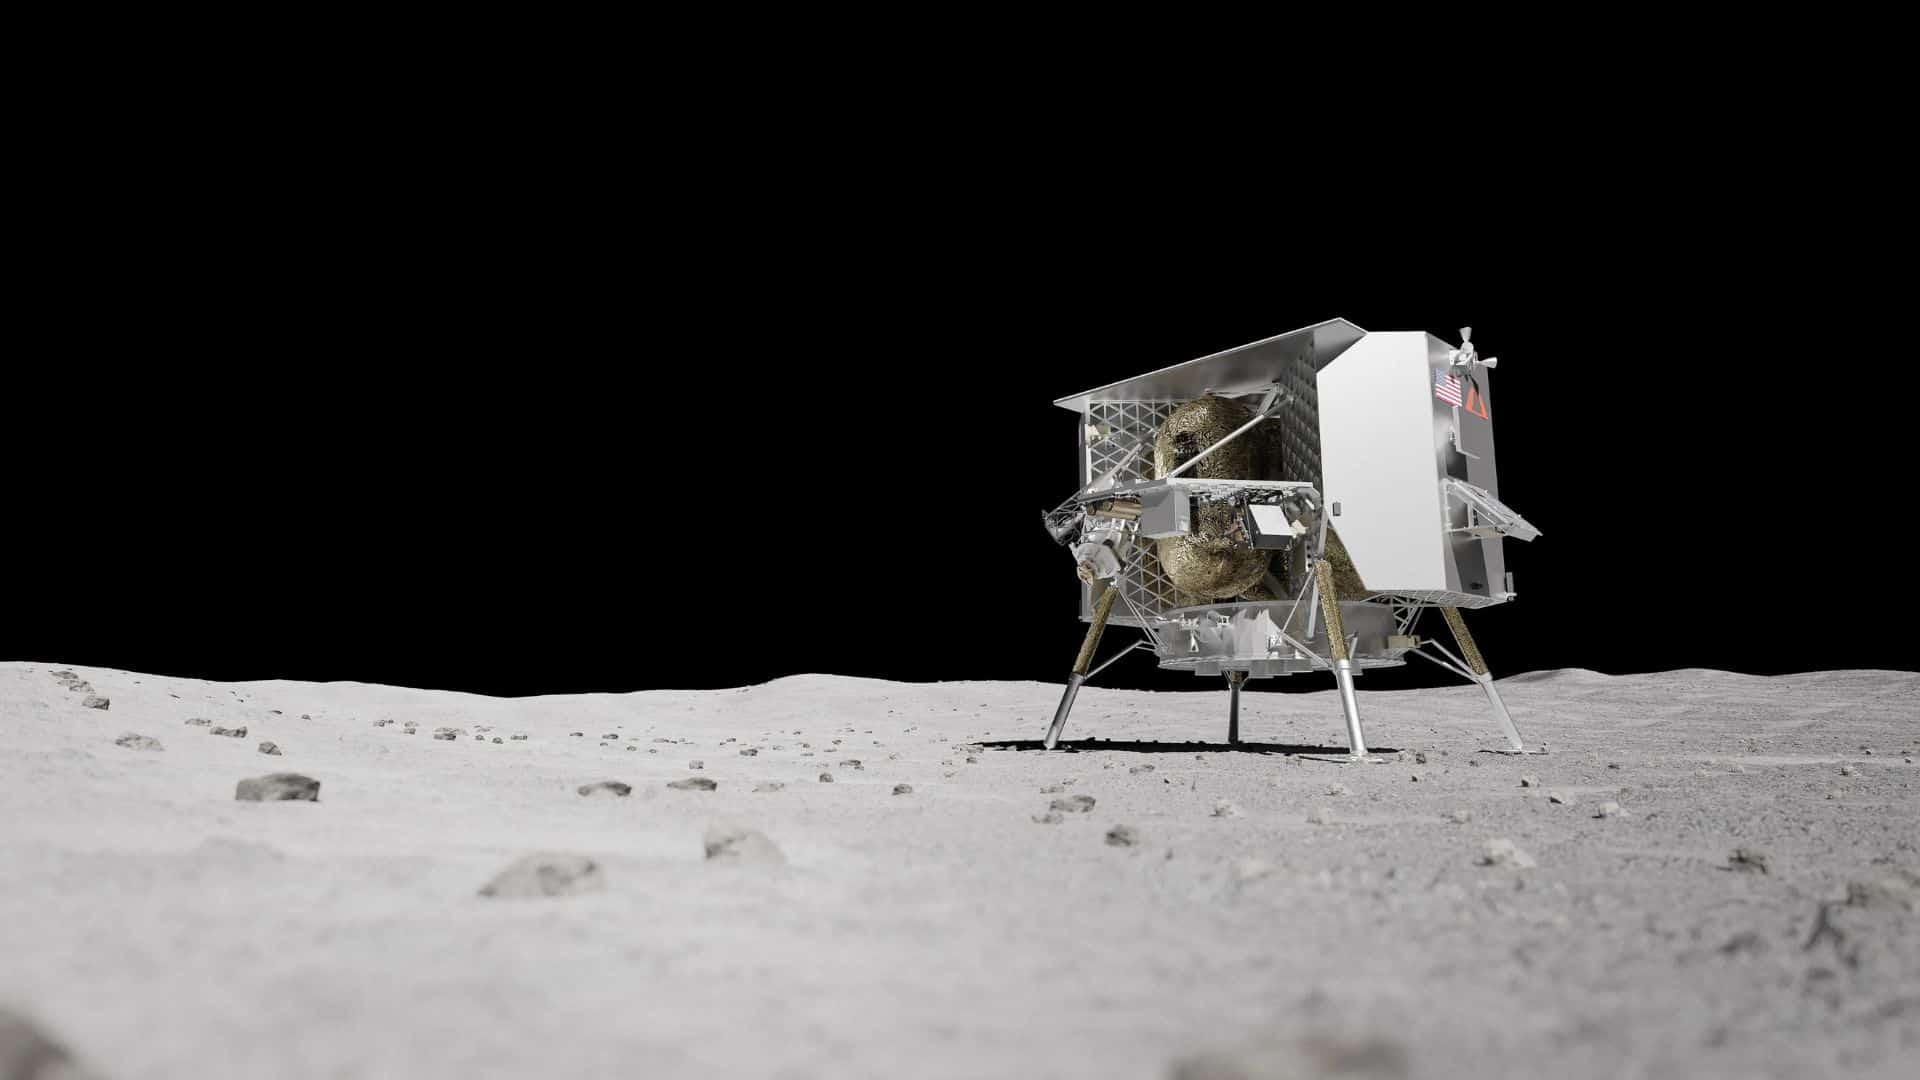 Astrobotic's Peregrine lunar lander